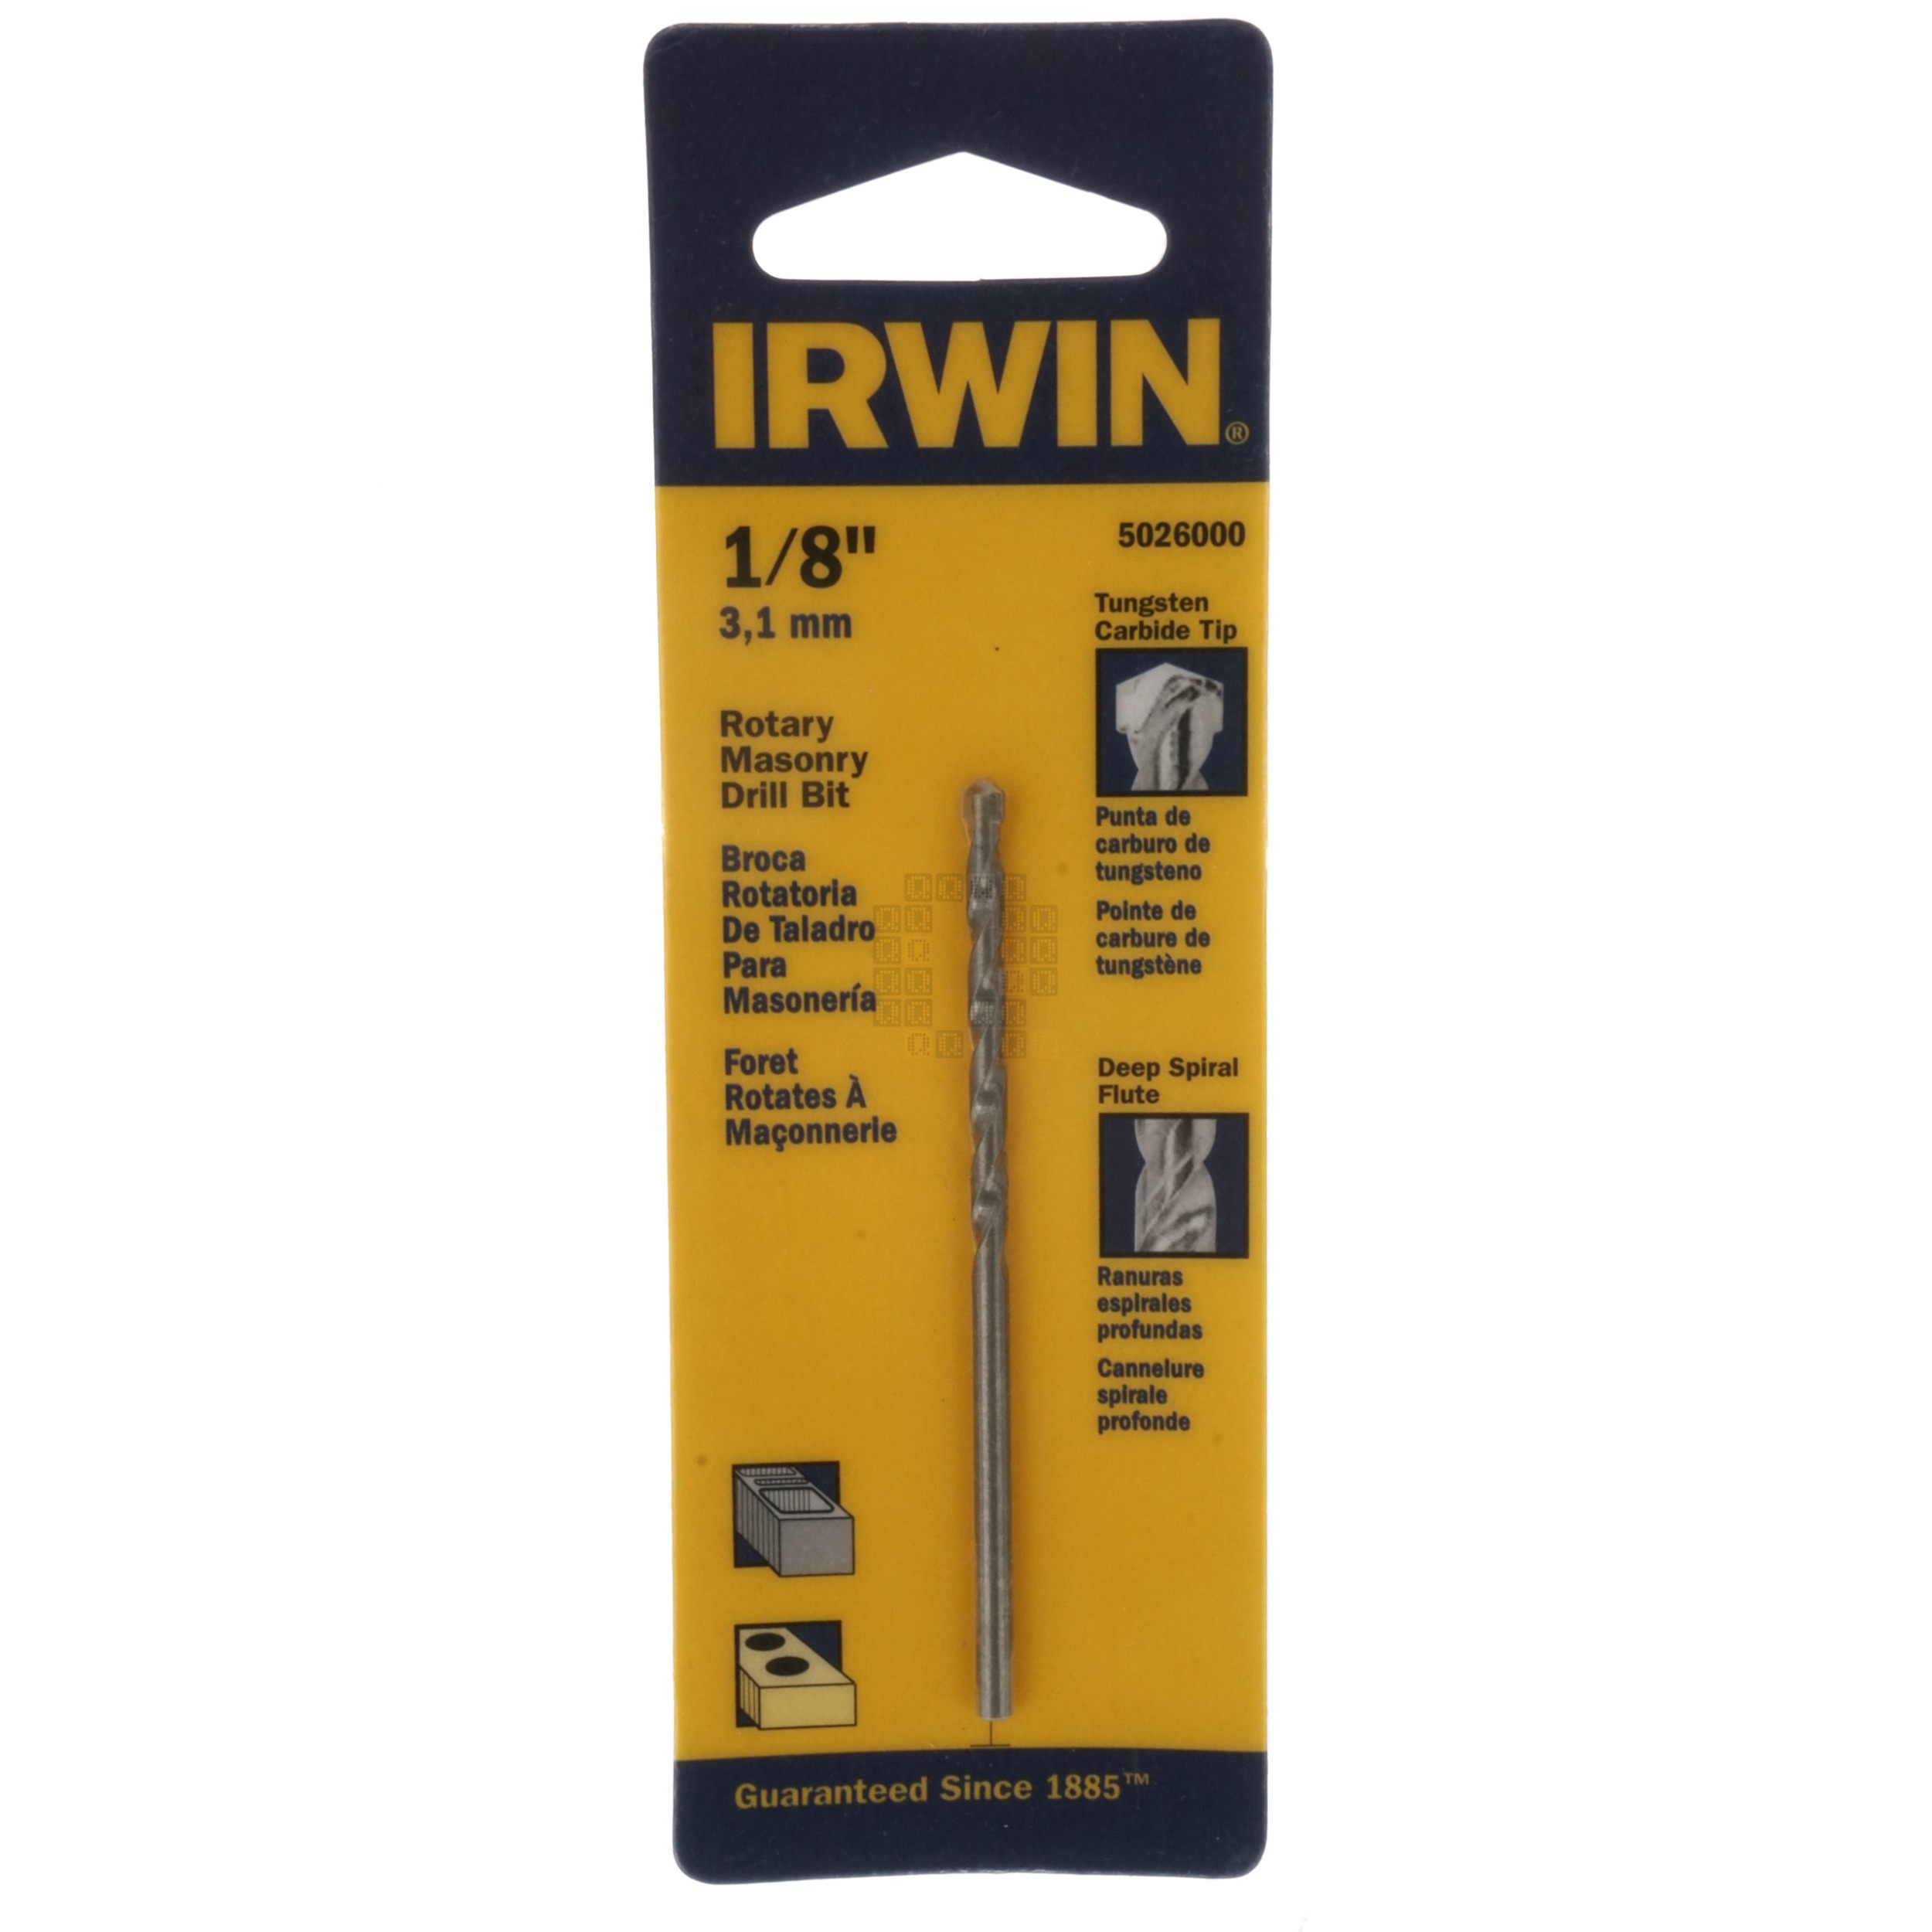 Irwin 5026000 1/8" Rotary Masonry Tungsten Carbide Tip Drill Bit